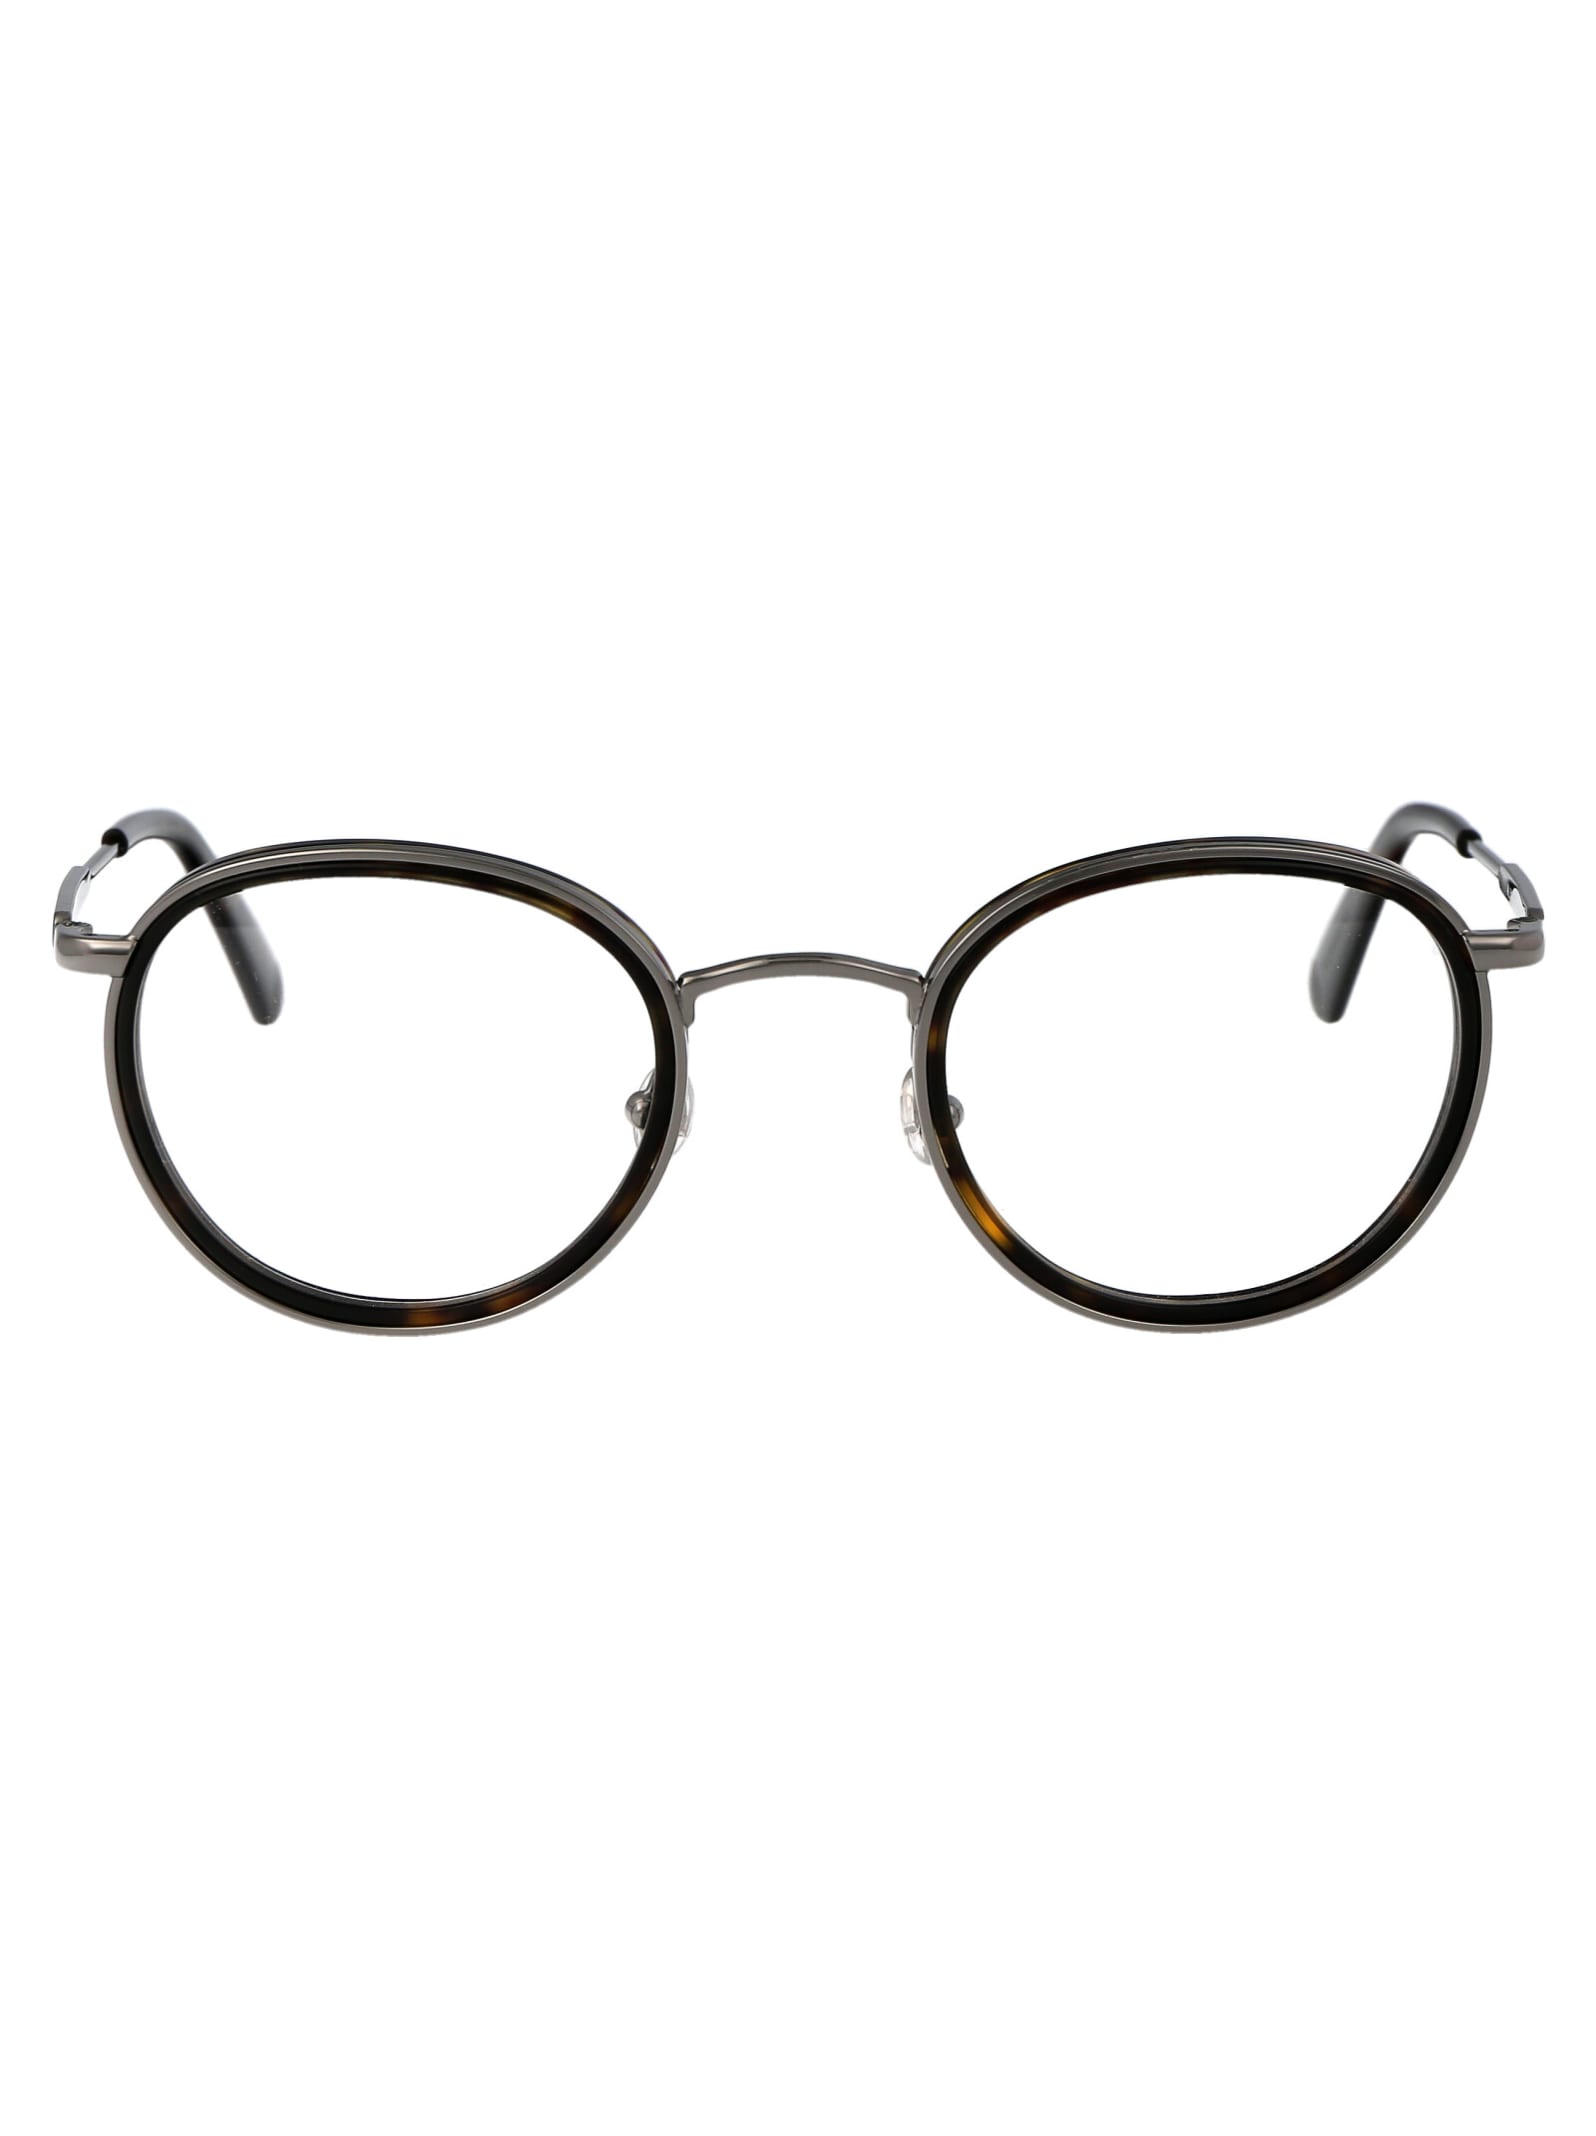 Ml5153 Glasses